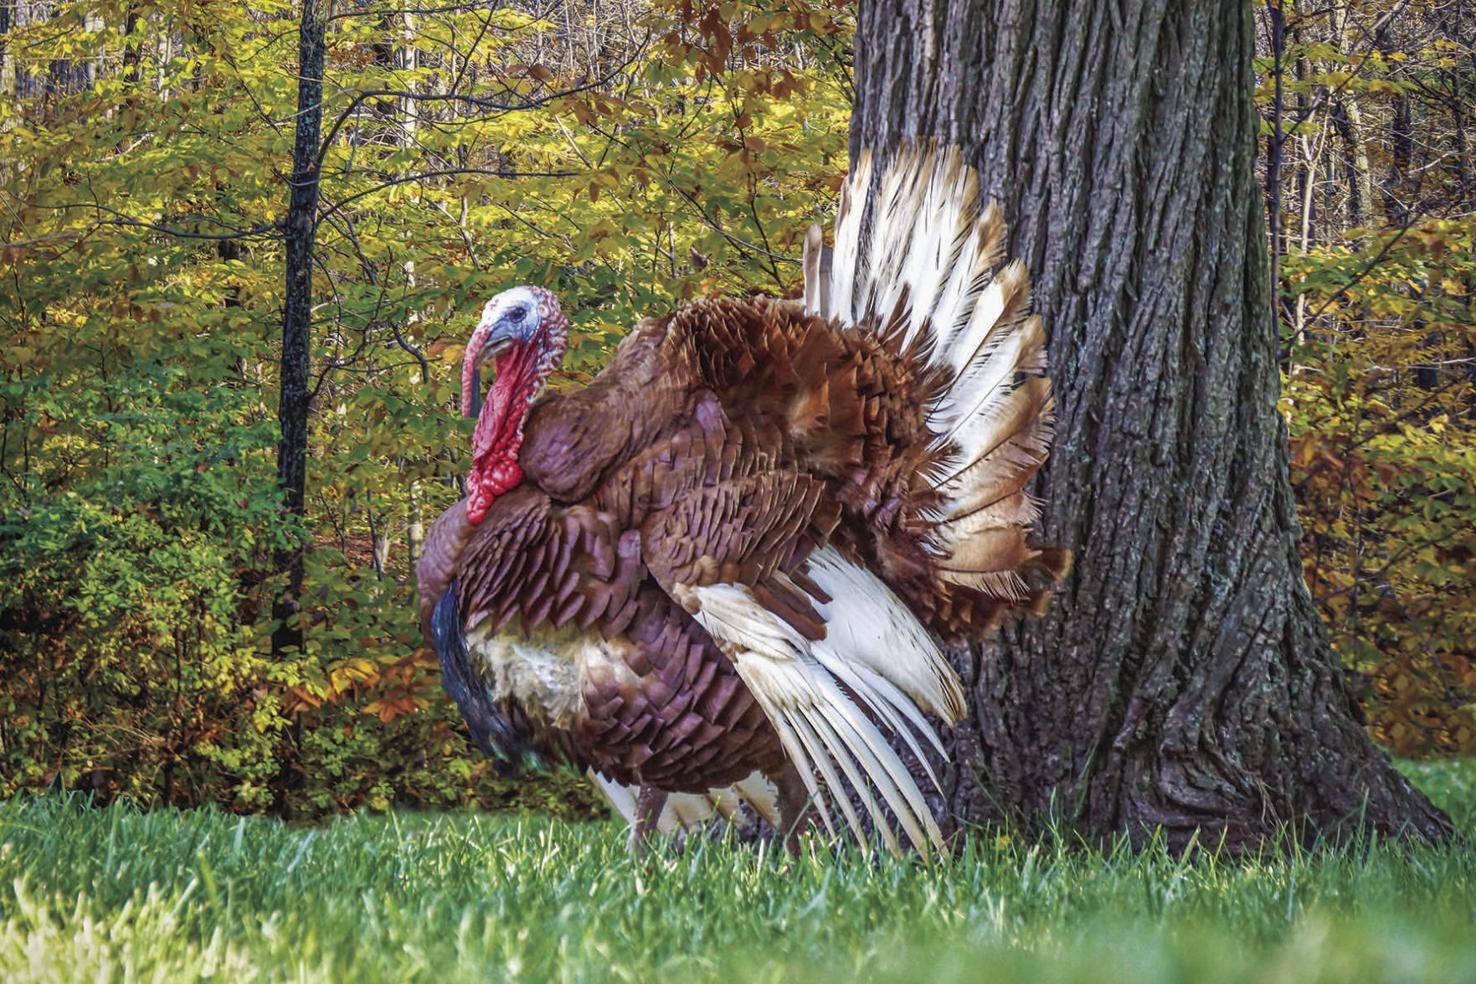 Spring turkey season opens April 11 in Montana Local News Stories